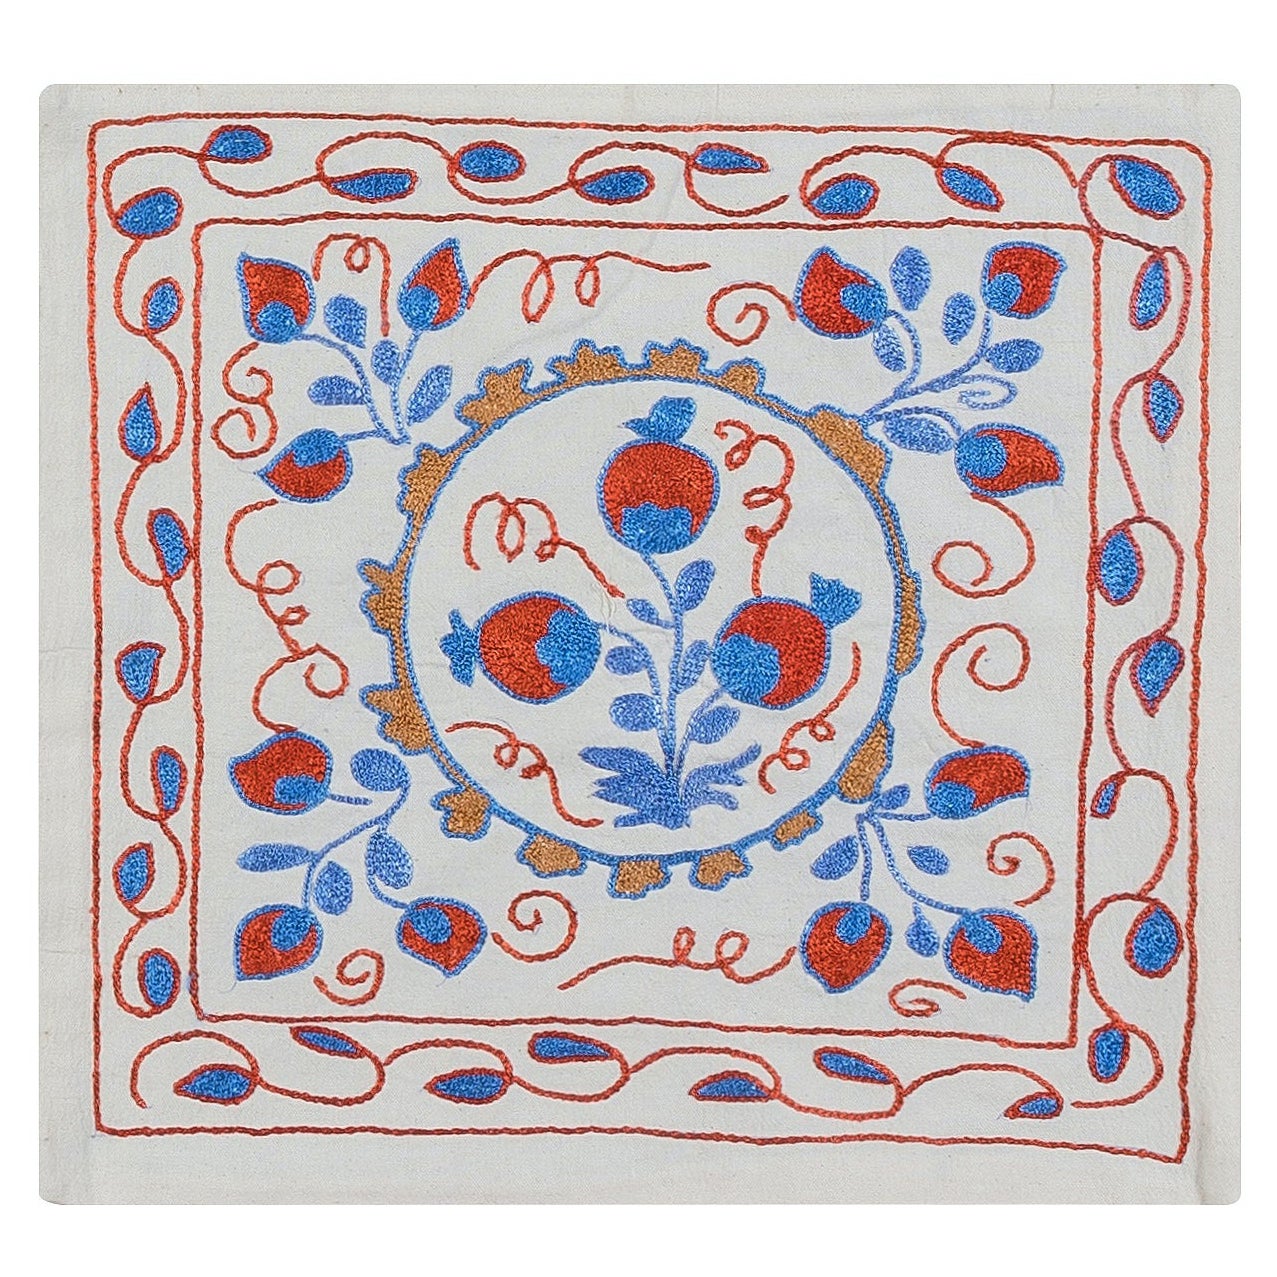 Uzbek Suzani Hand Embroidered Cushion Cover, Silk Decorative Lace Pillow